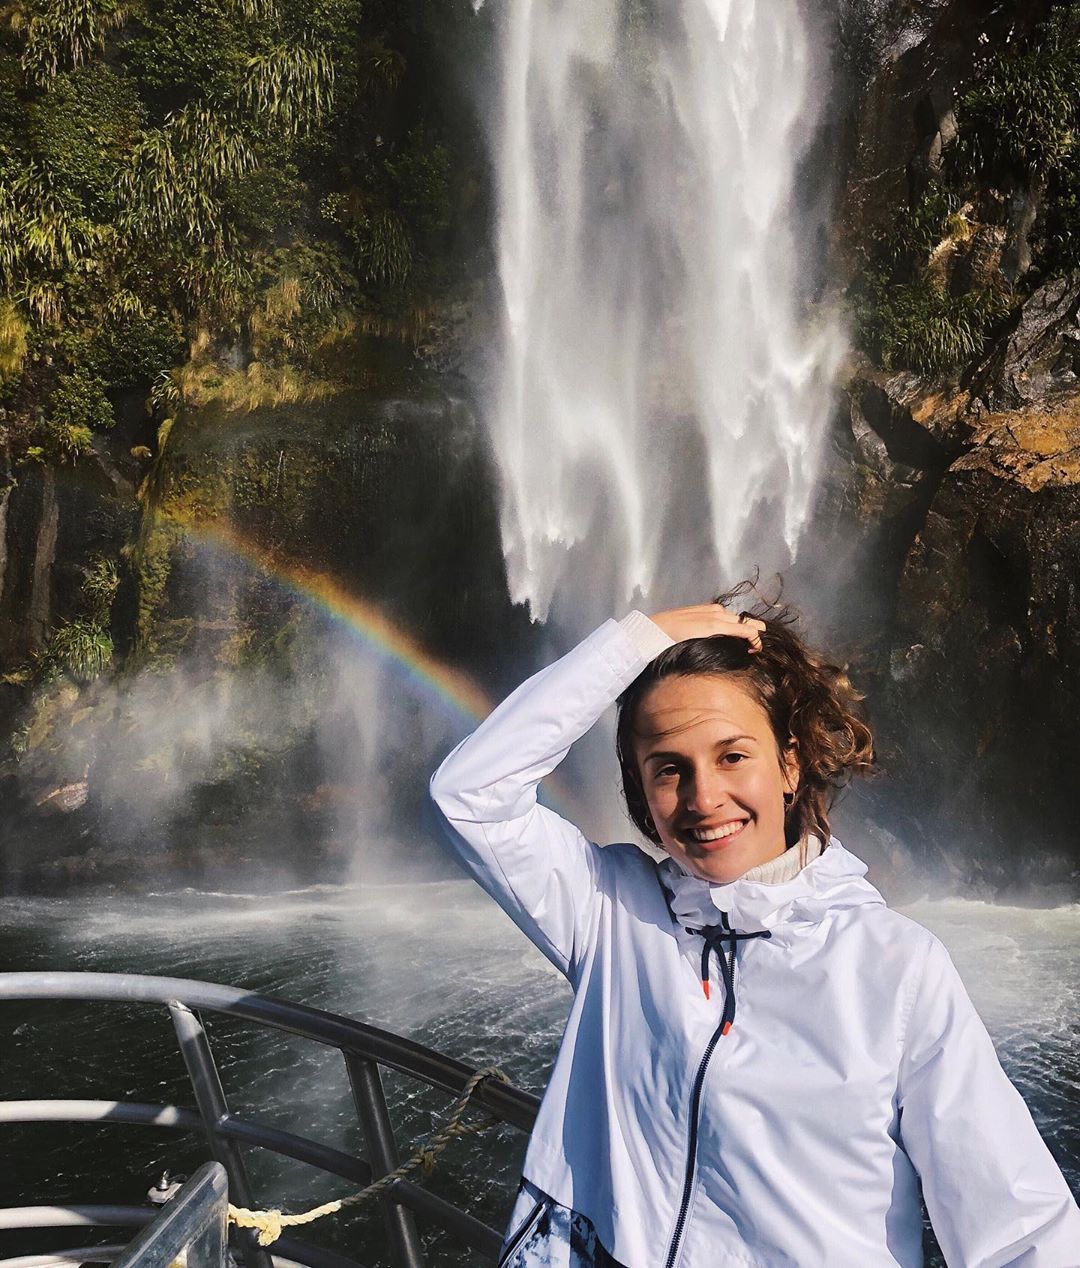 Валерия Демидова на фоне водопада в белой кофте